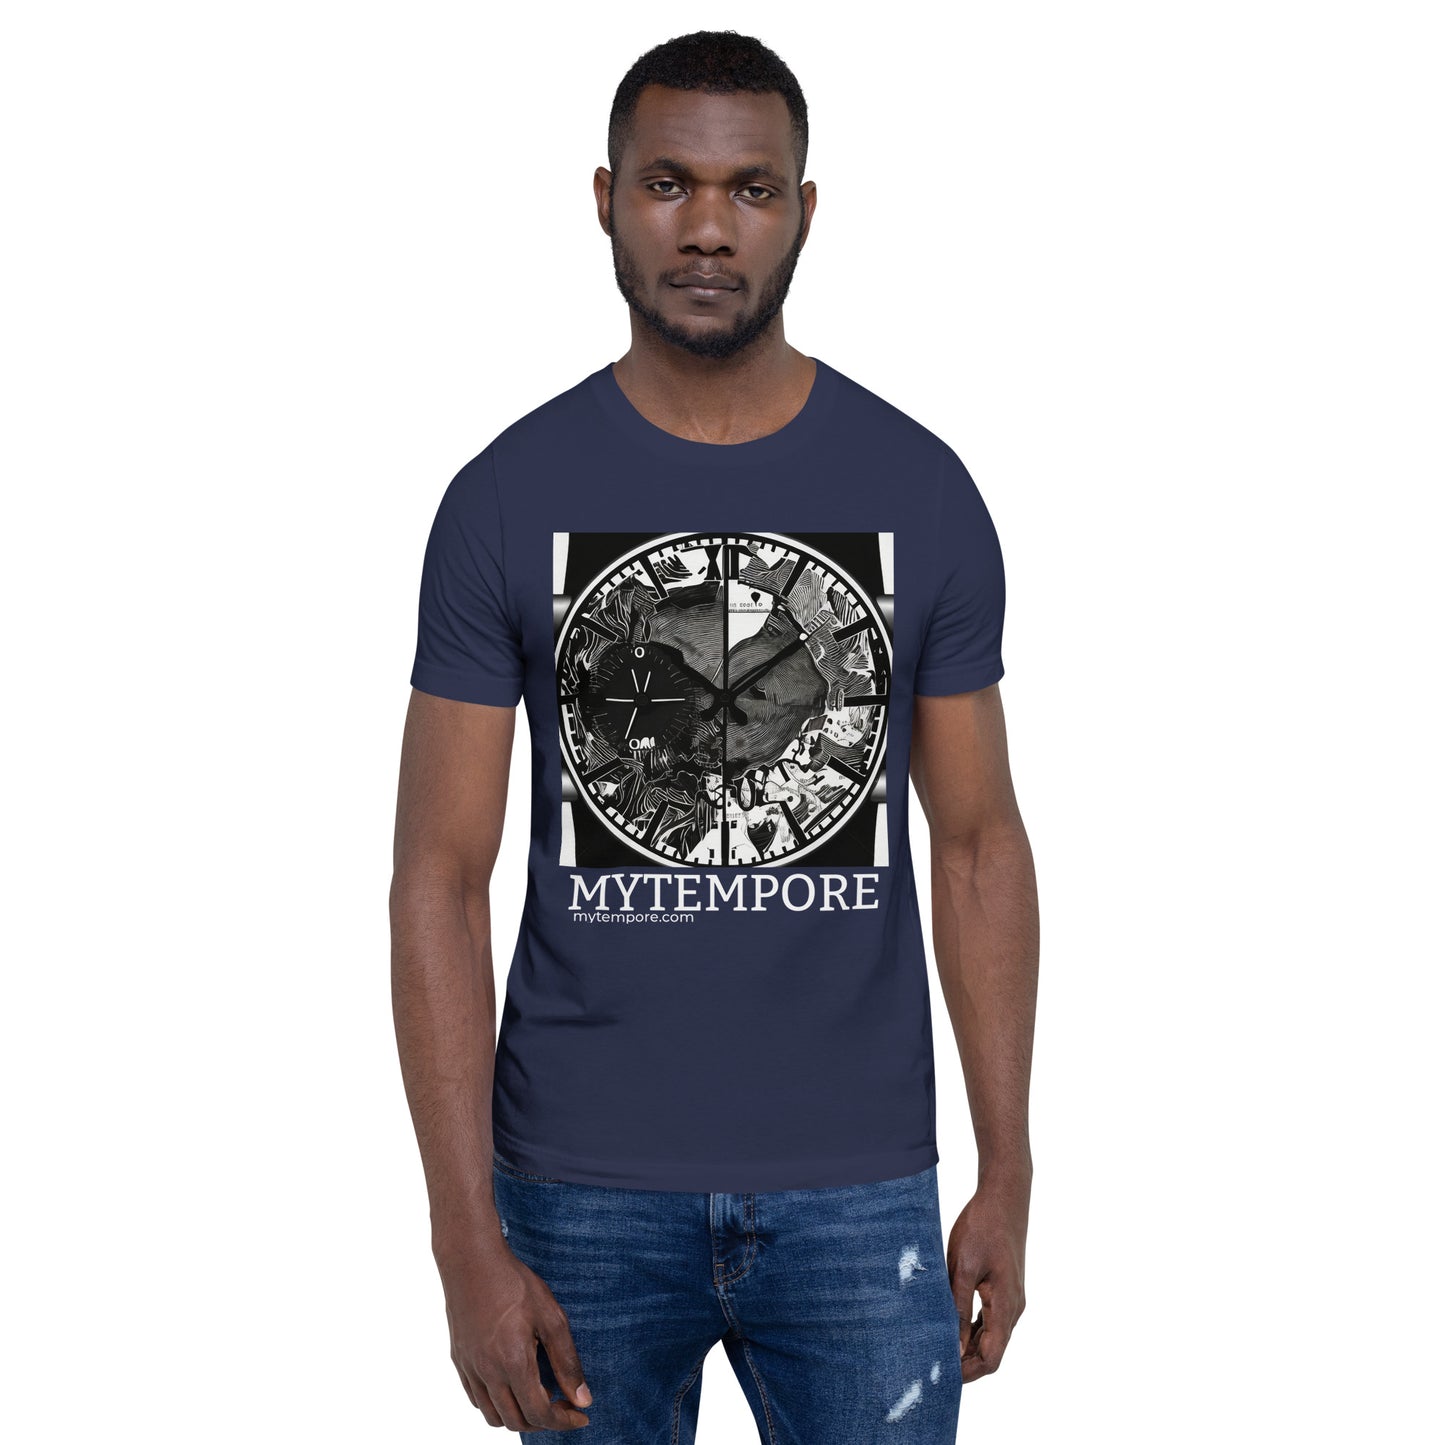 "MYTEMPORE" TIME Unisex t-shirt